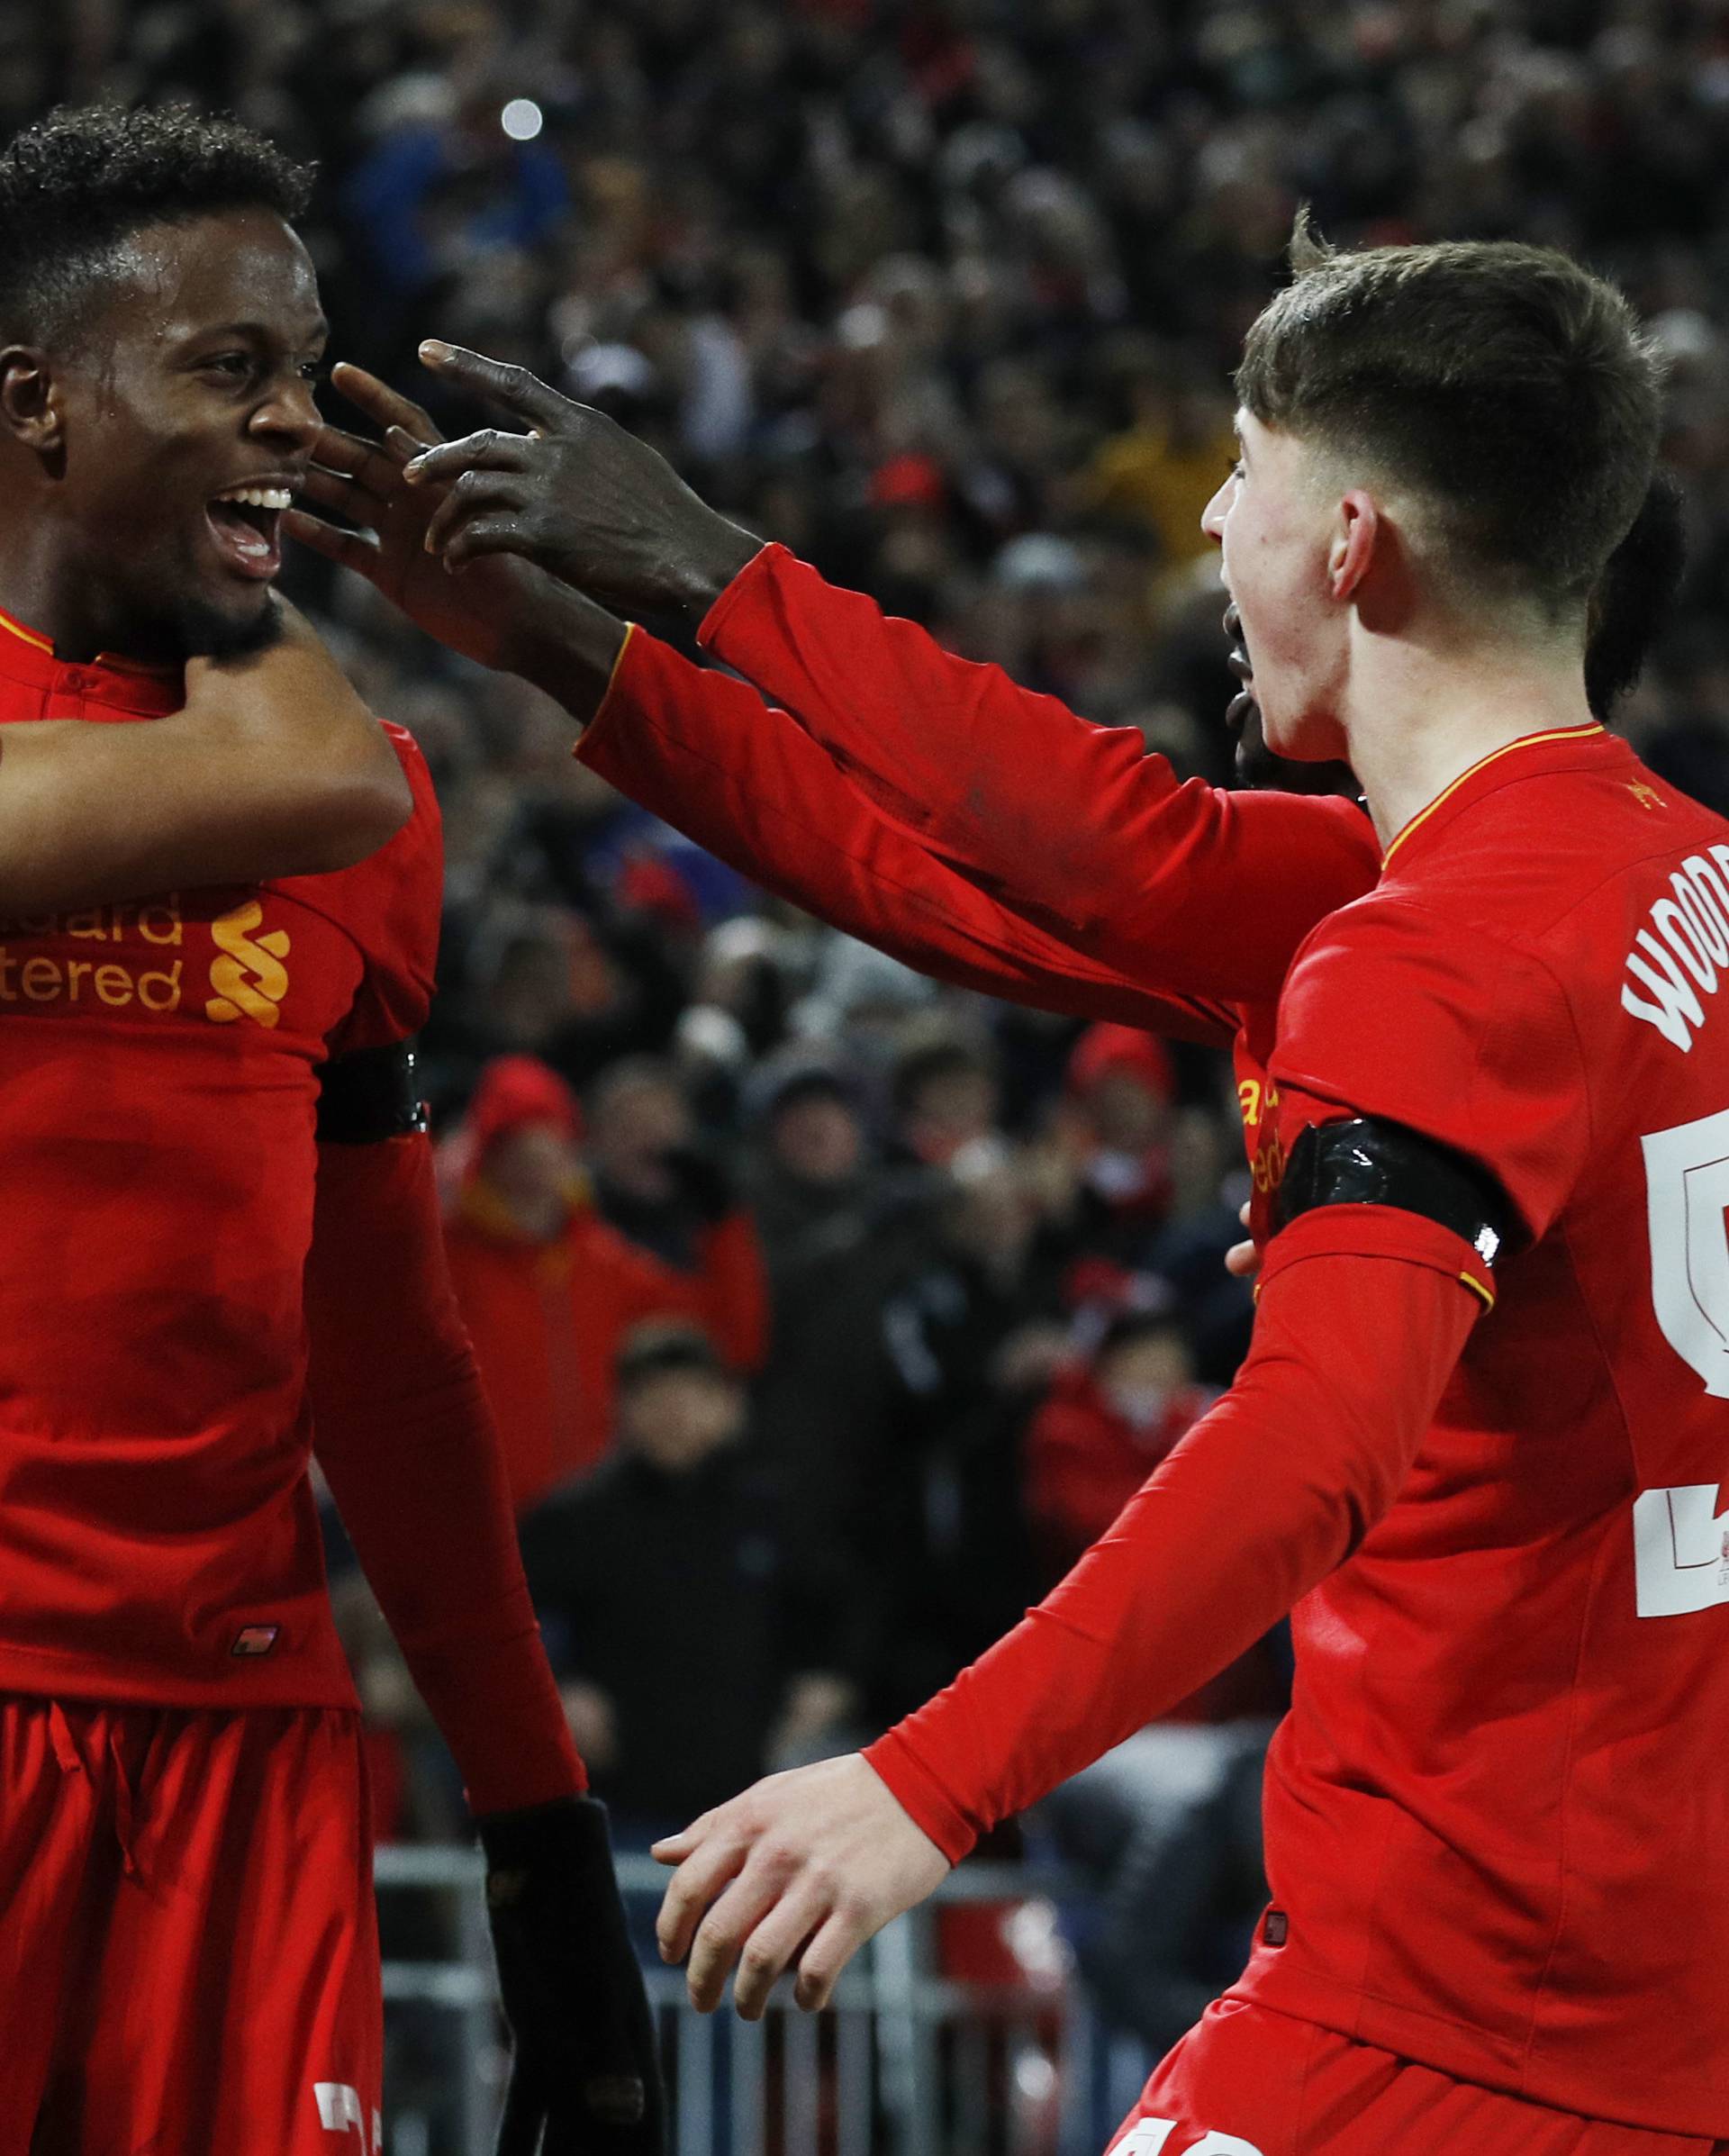 Liverpool's Divock Origi celebrates scoring their first goal with Ben Woodburn and Trent Alexander-Arnold